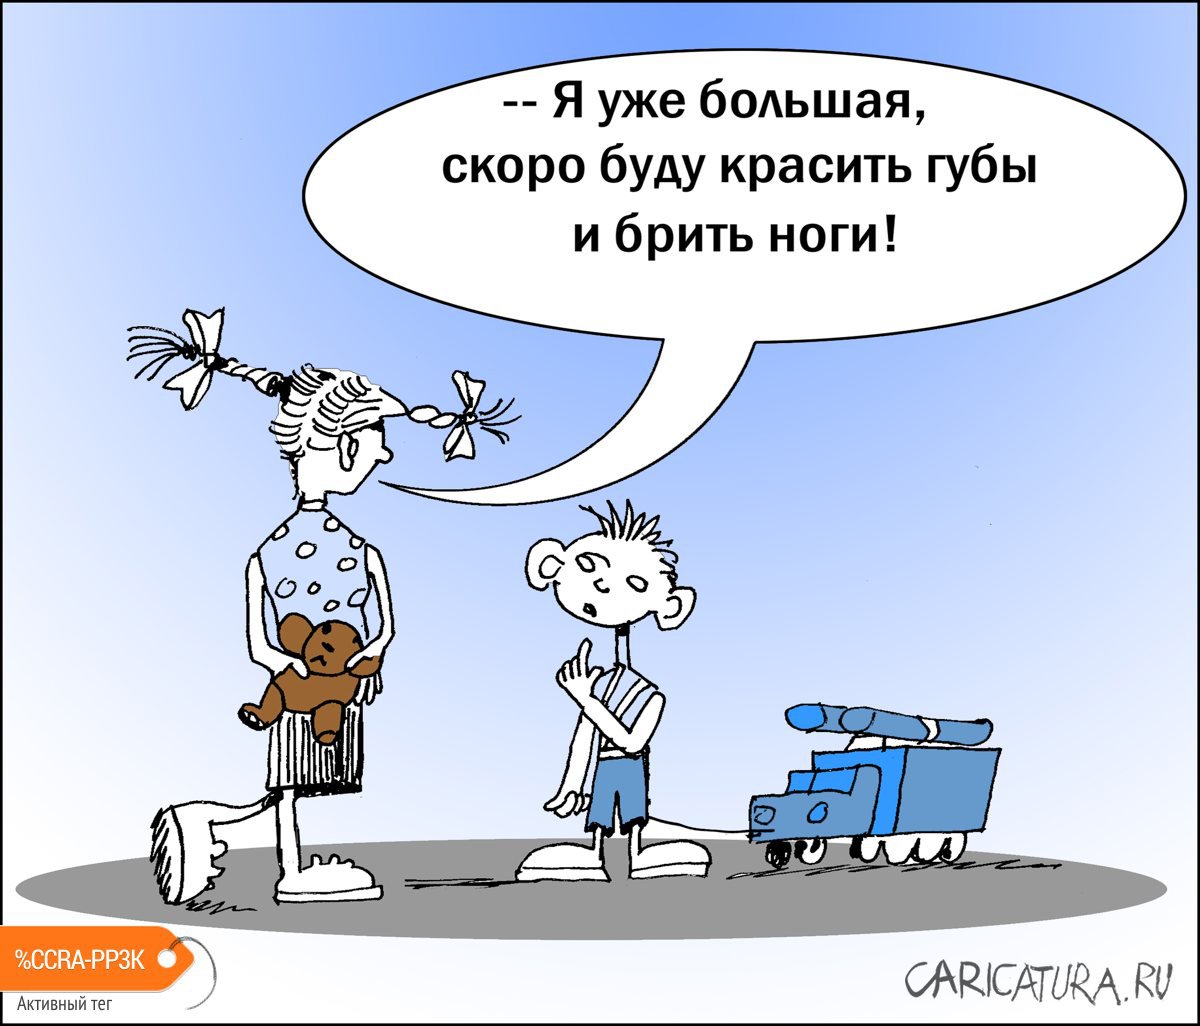 Карикатура "Детство", Александр Уваров